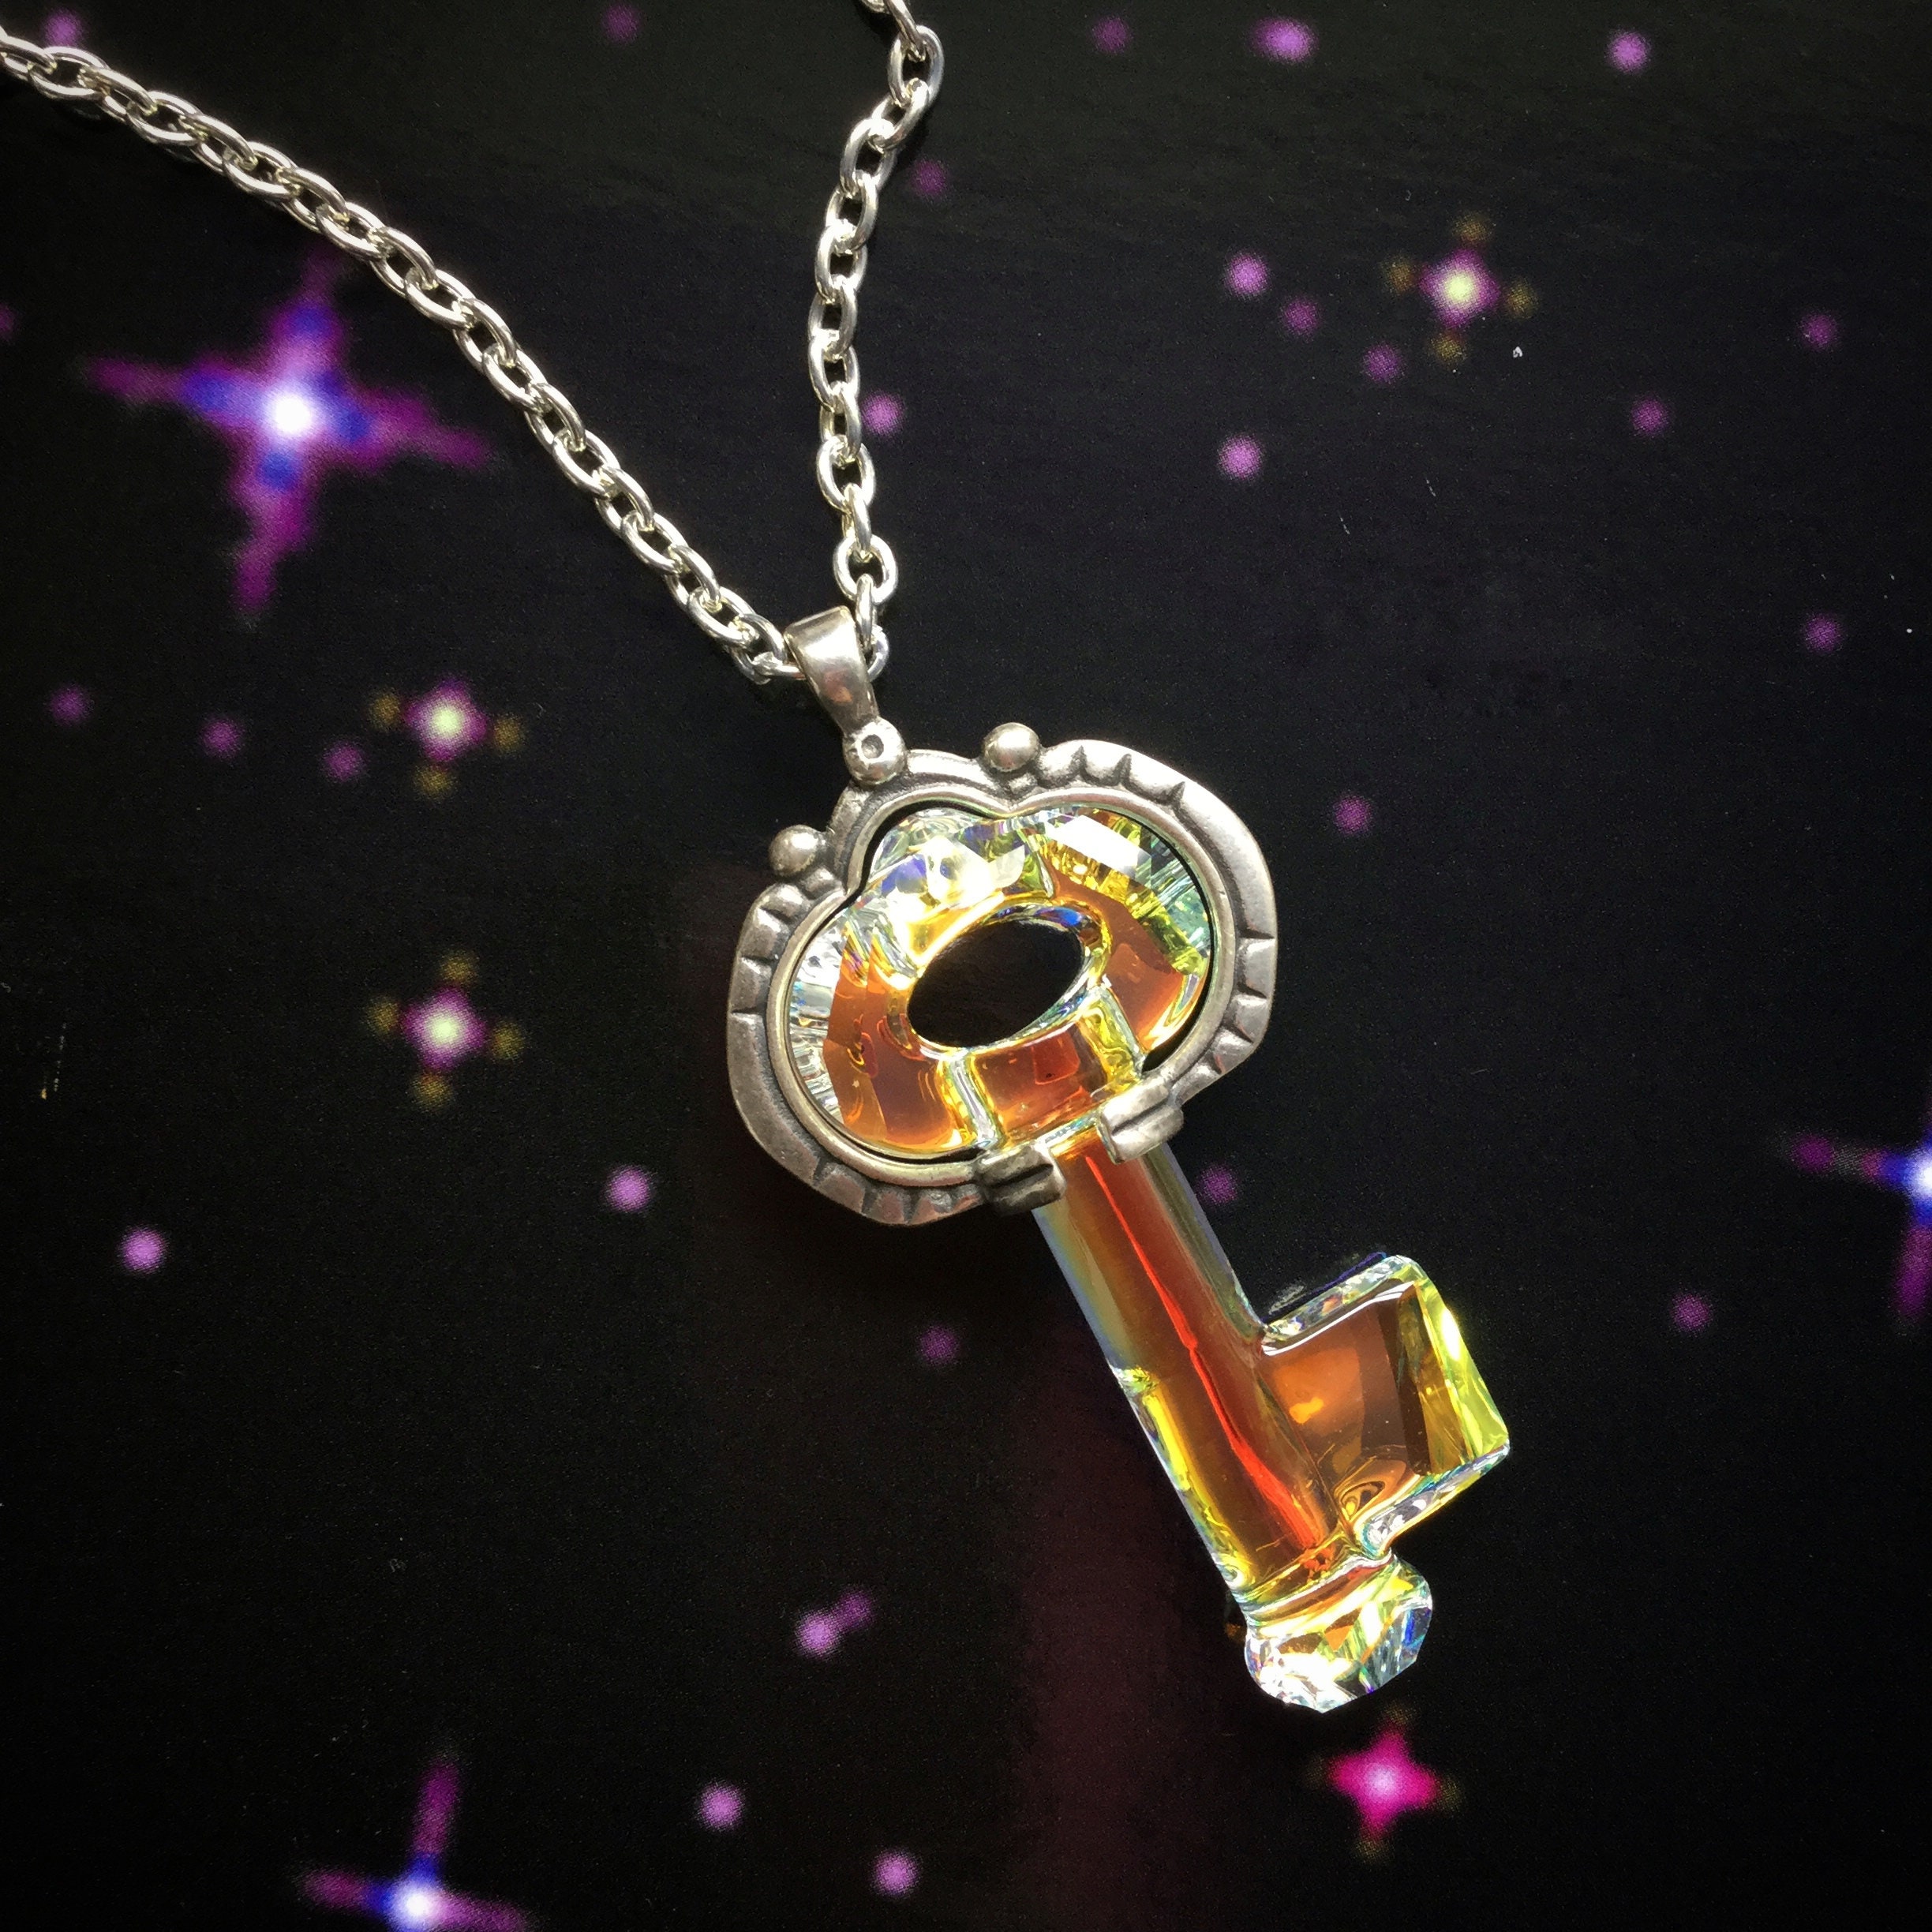 Crystal Key necklace, Swarovski ‘Key to open the Forest’